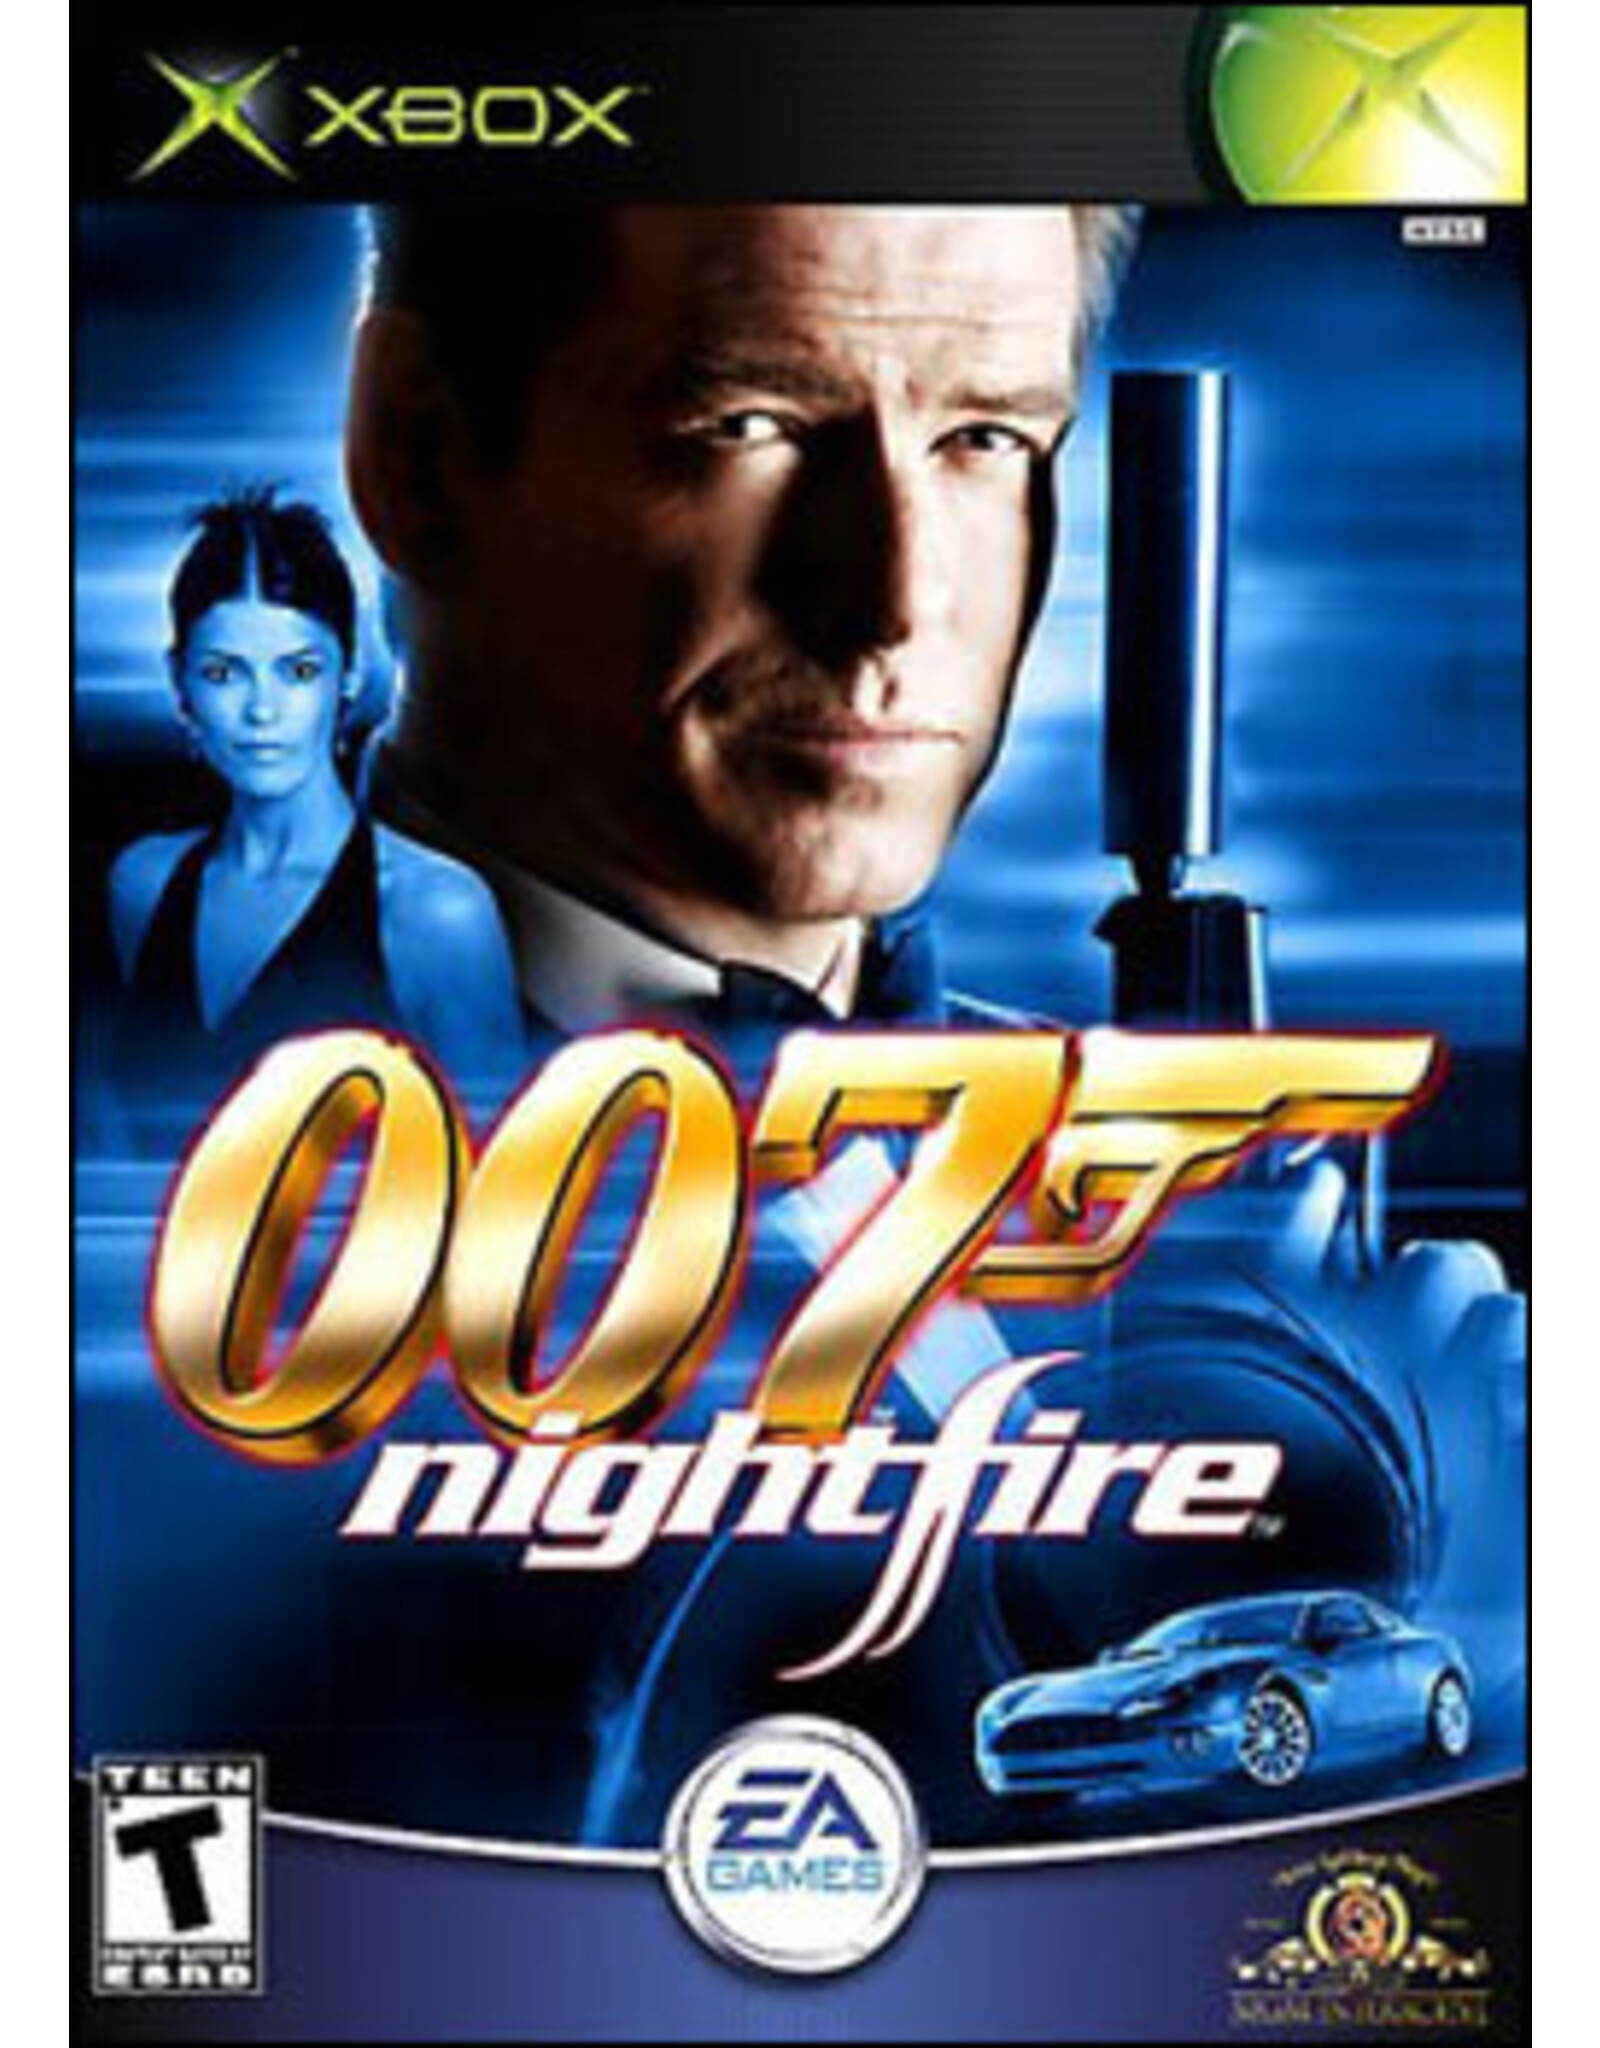 Xbox 007 Nightfire (Used)